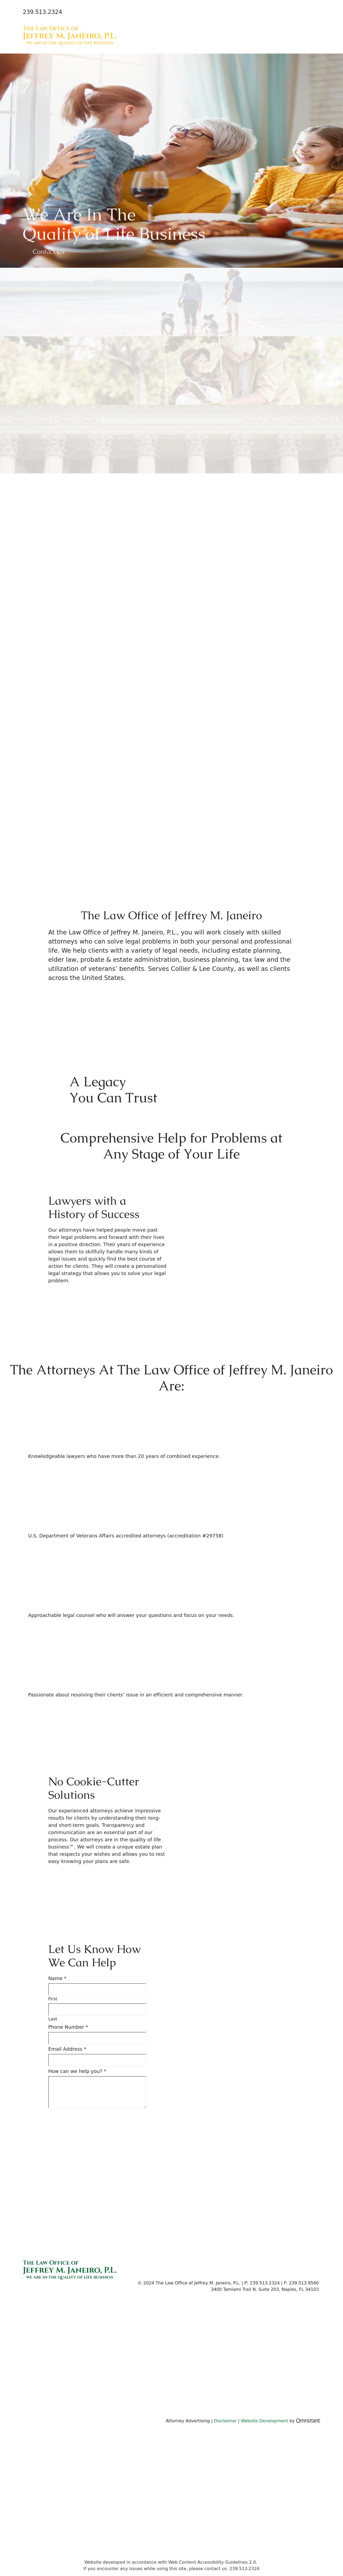 The Law Office of Jeffrey M. Janeiro, P.L. - Naples FL Lawyers